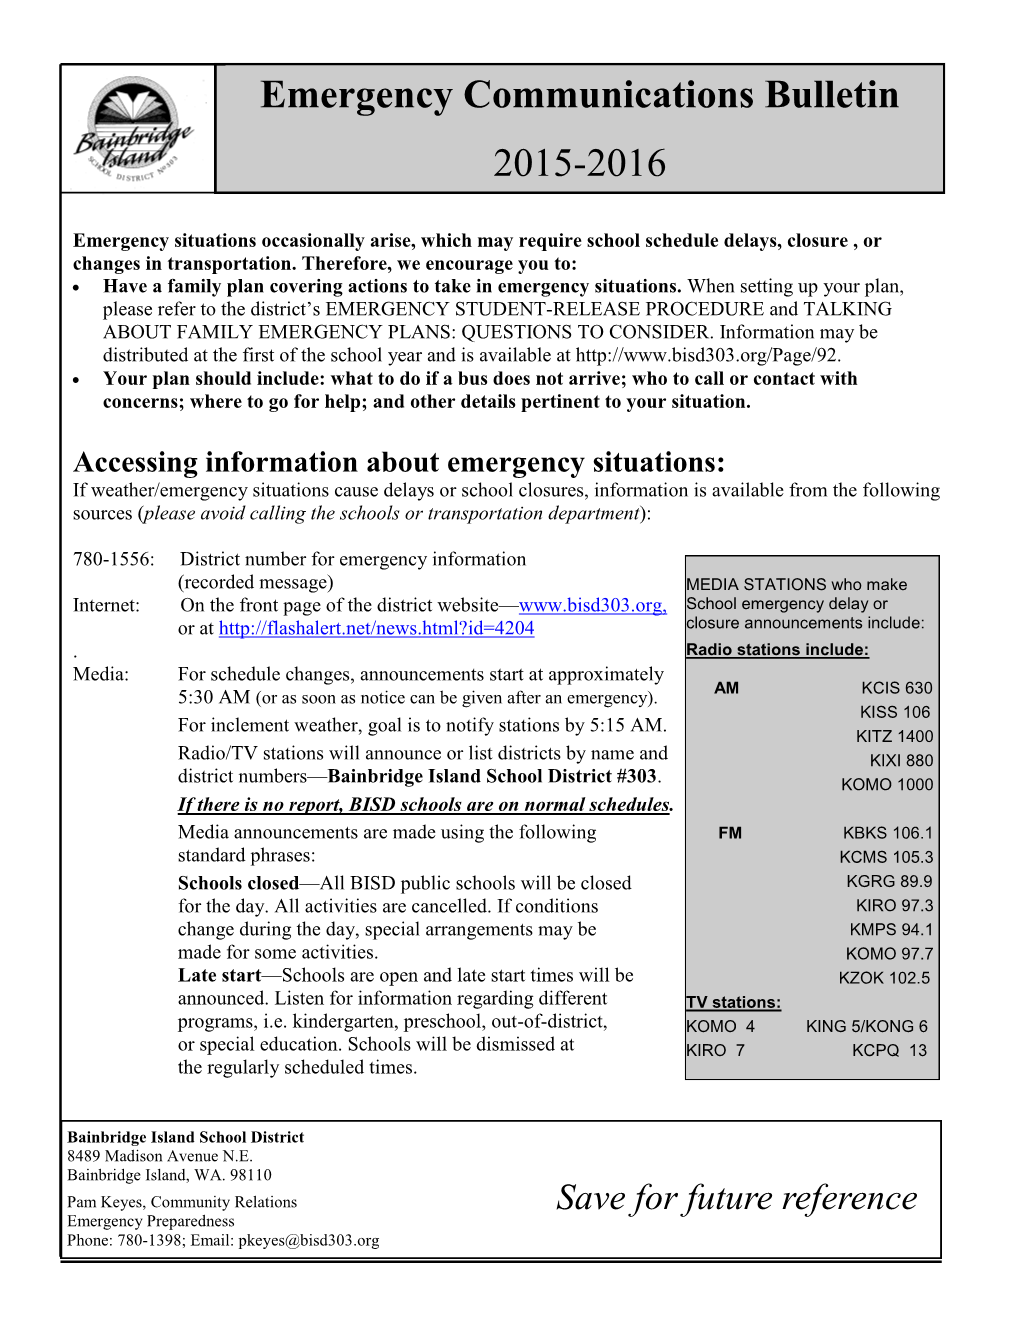 Emergency Communications Bulletin 2015-2016